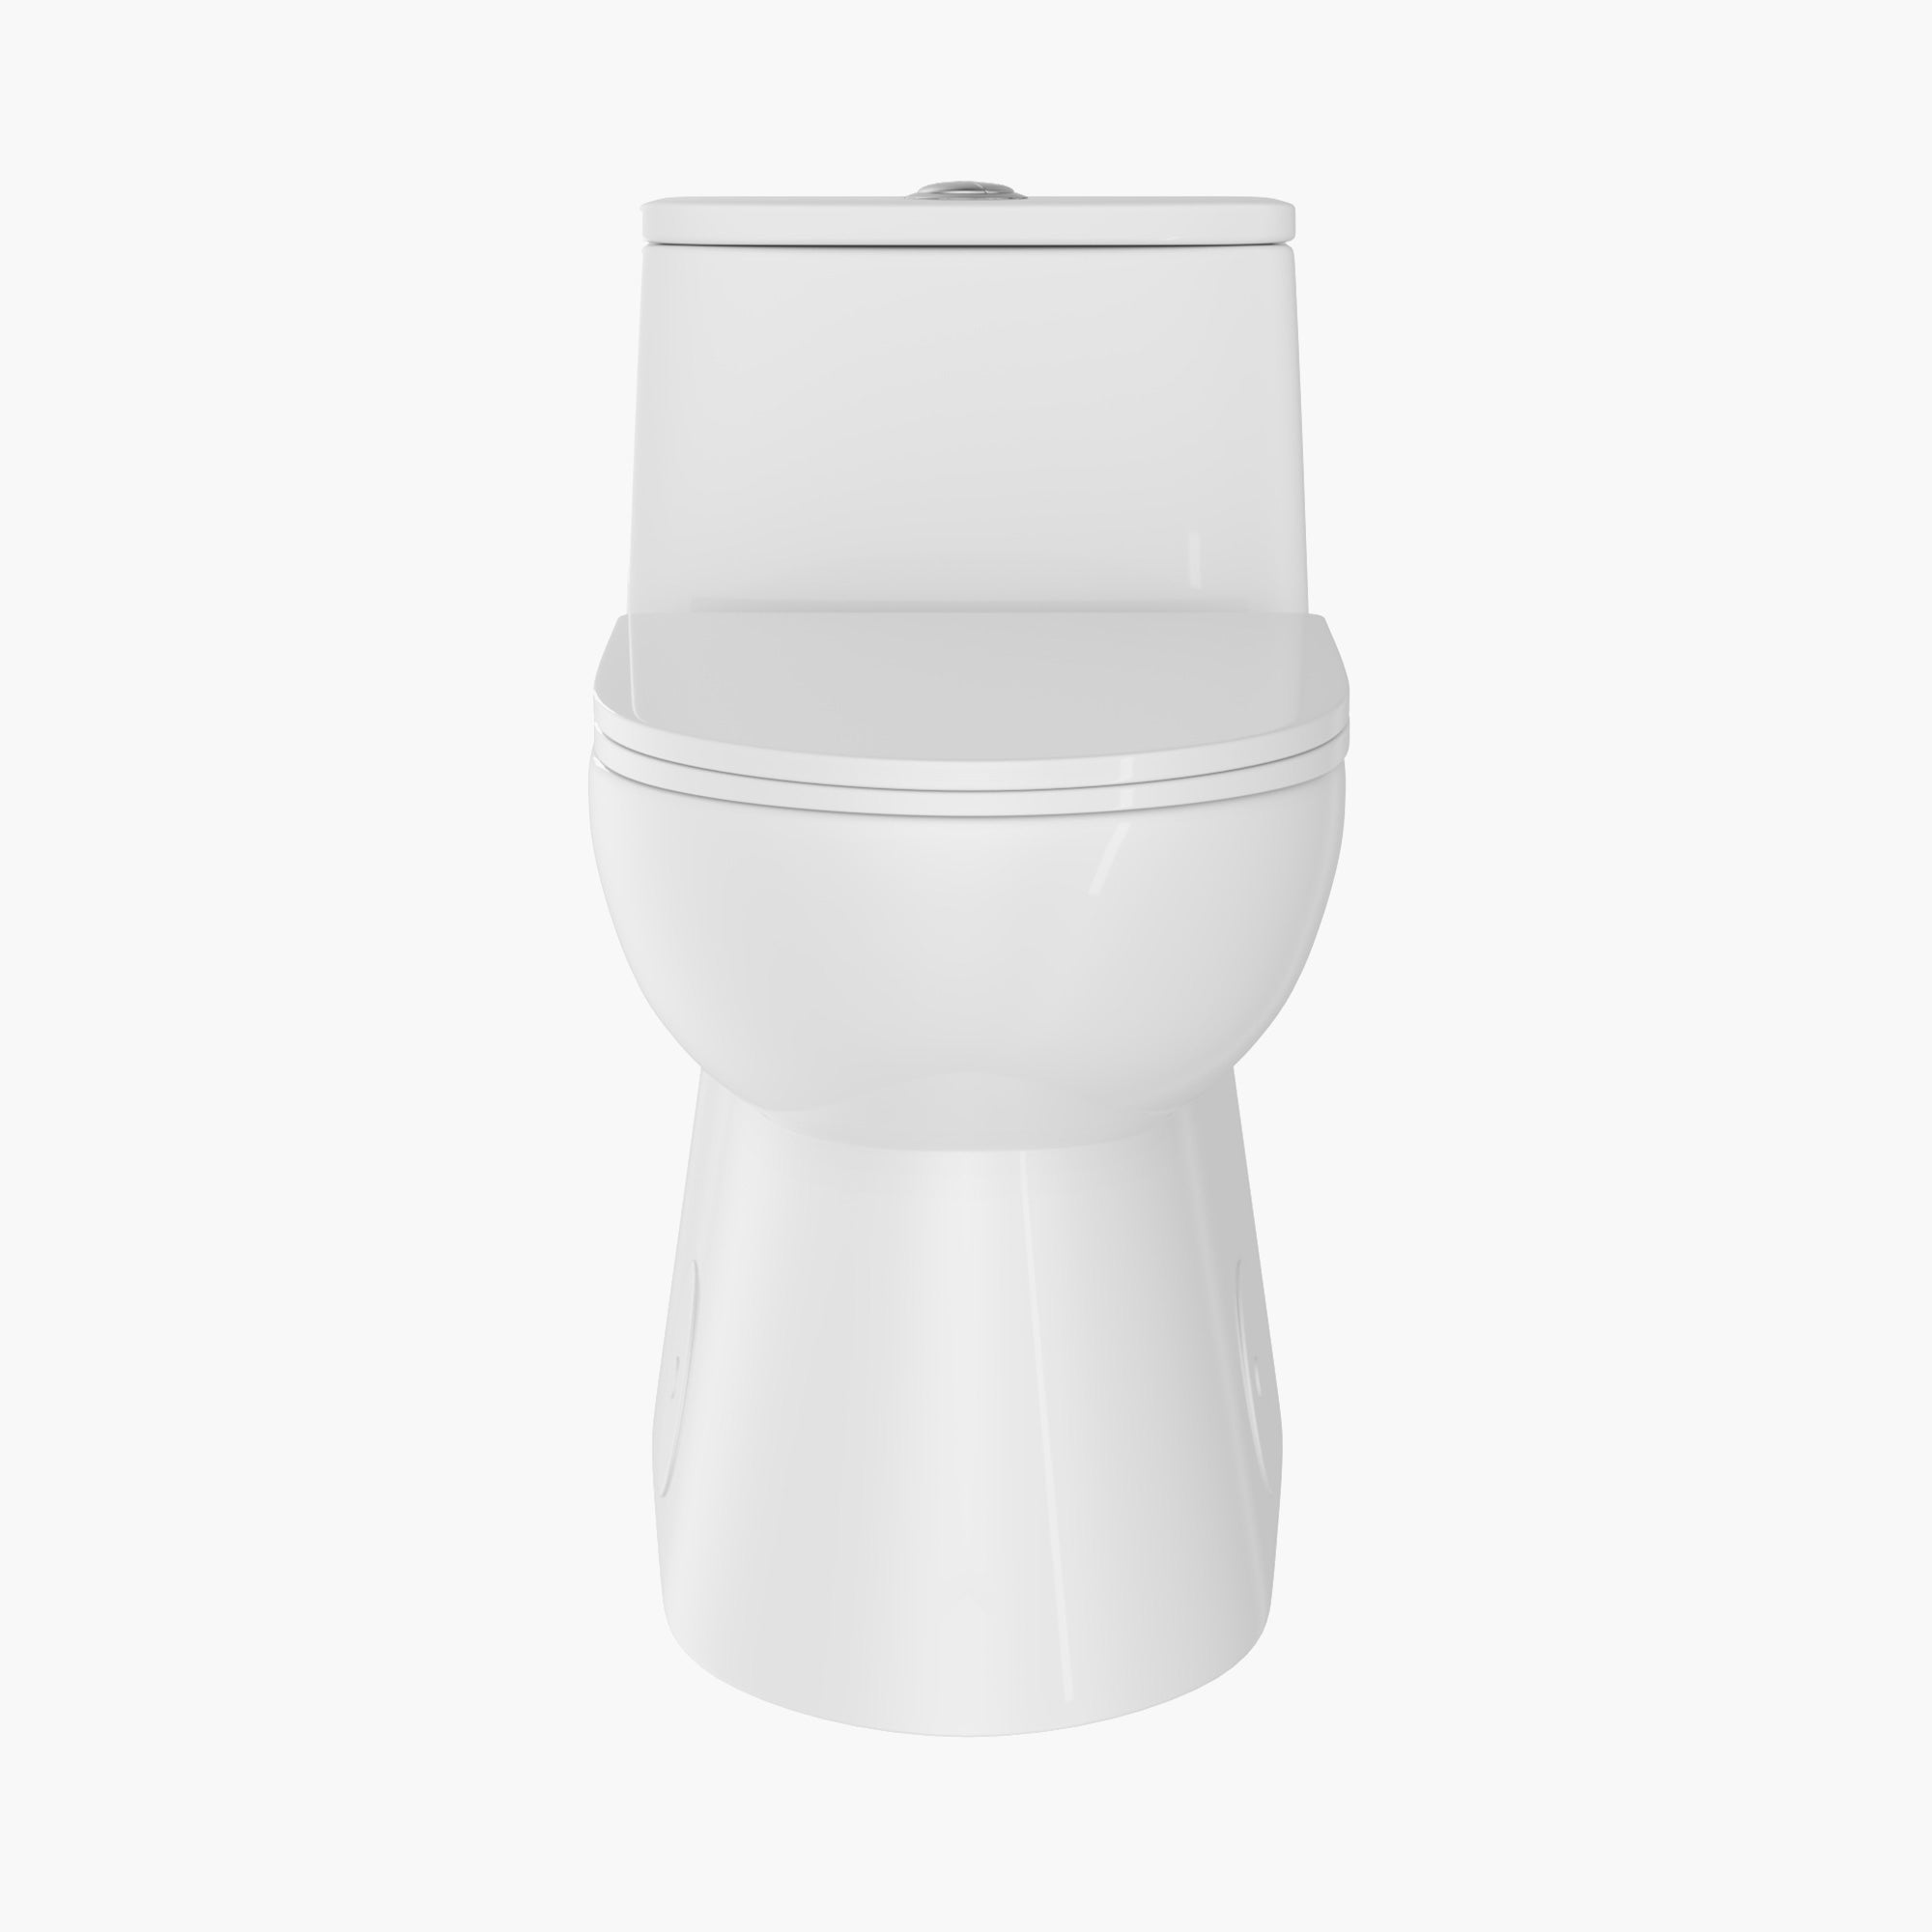 HOROW Best Dual Flush Toilet Modern Elongated Raised Toilet Seat Model T0334W